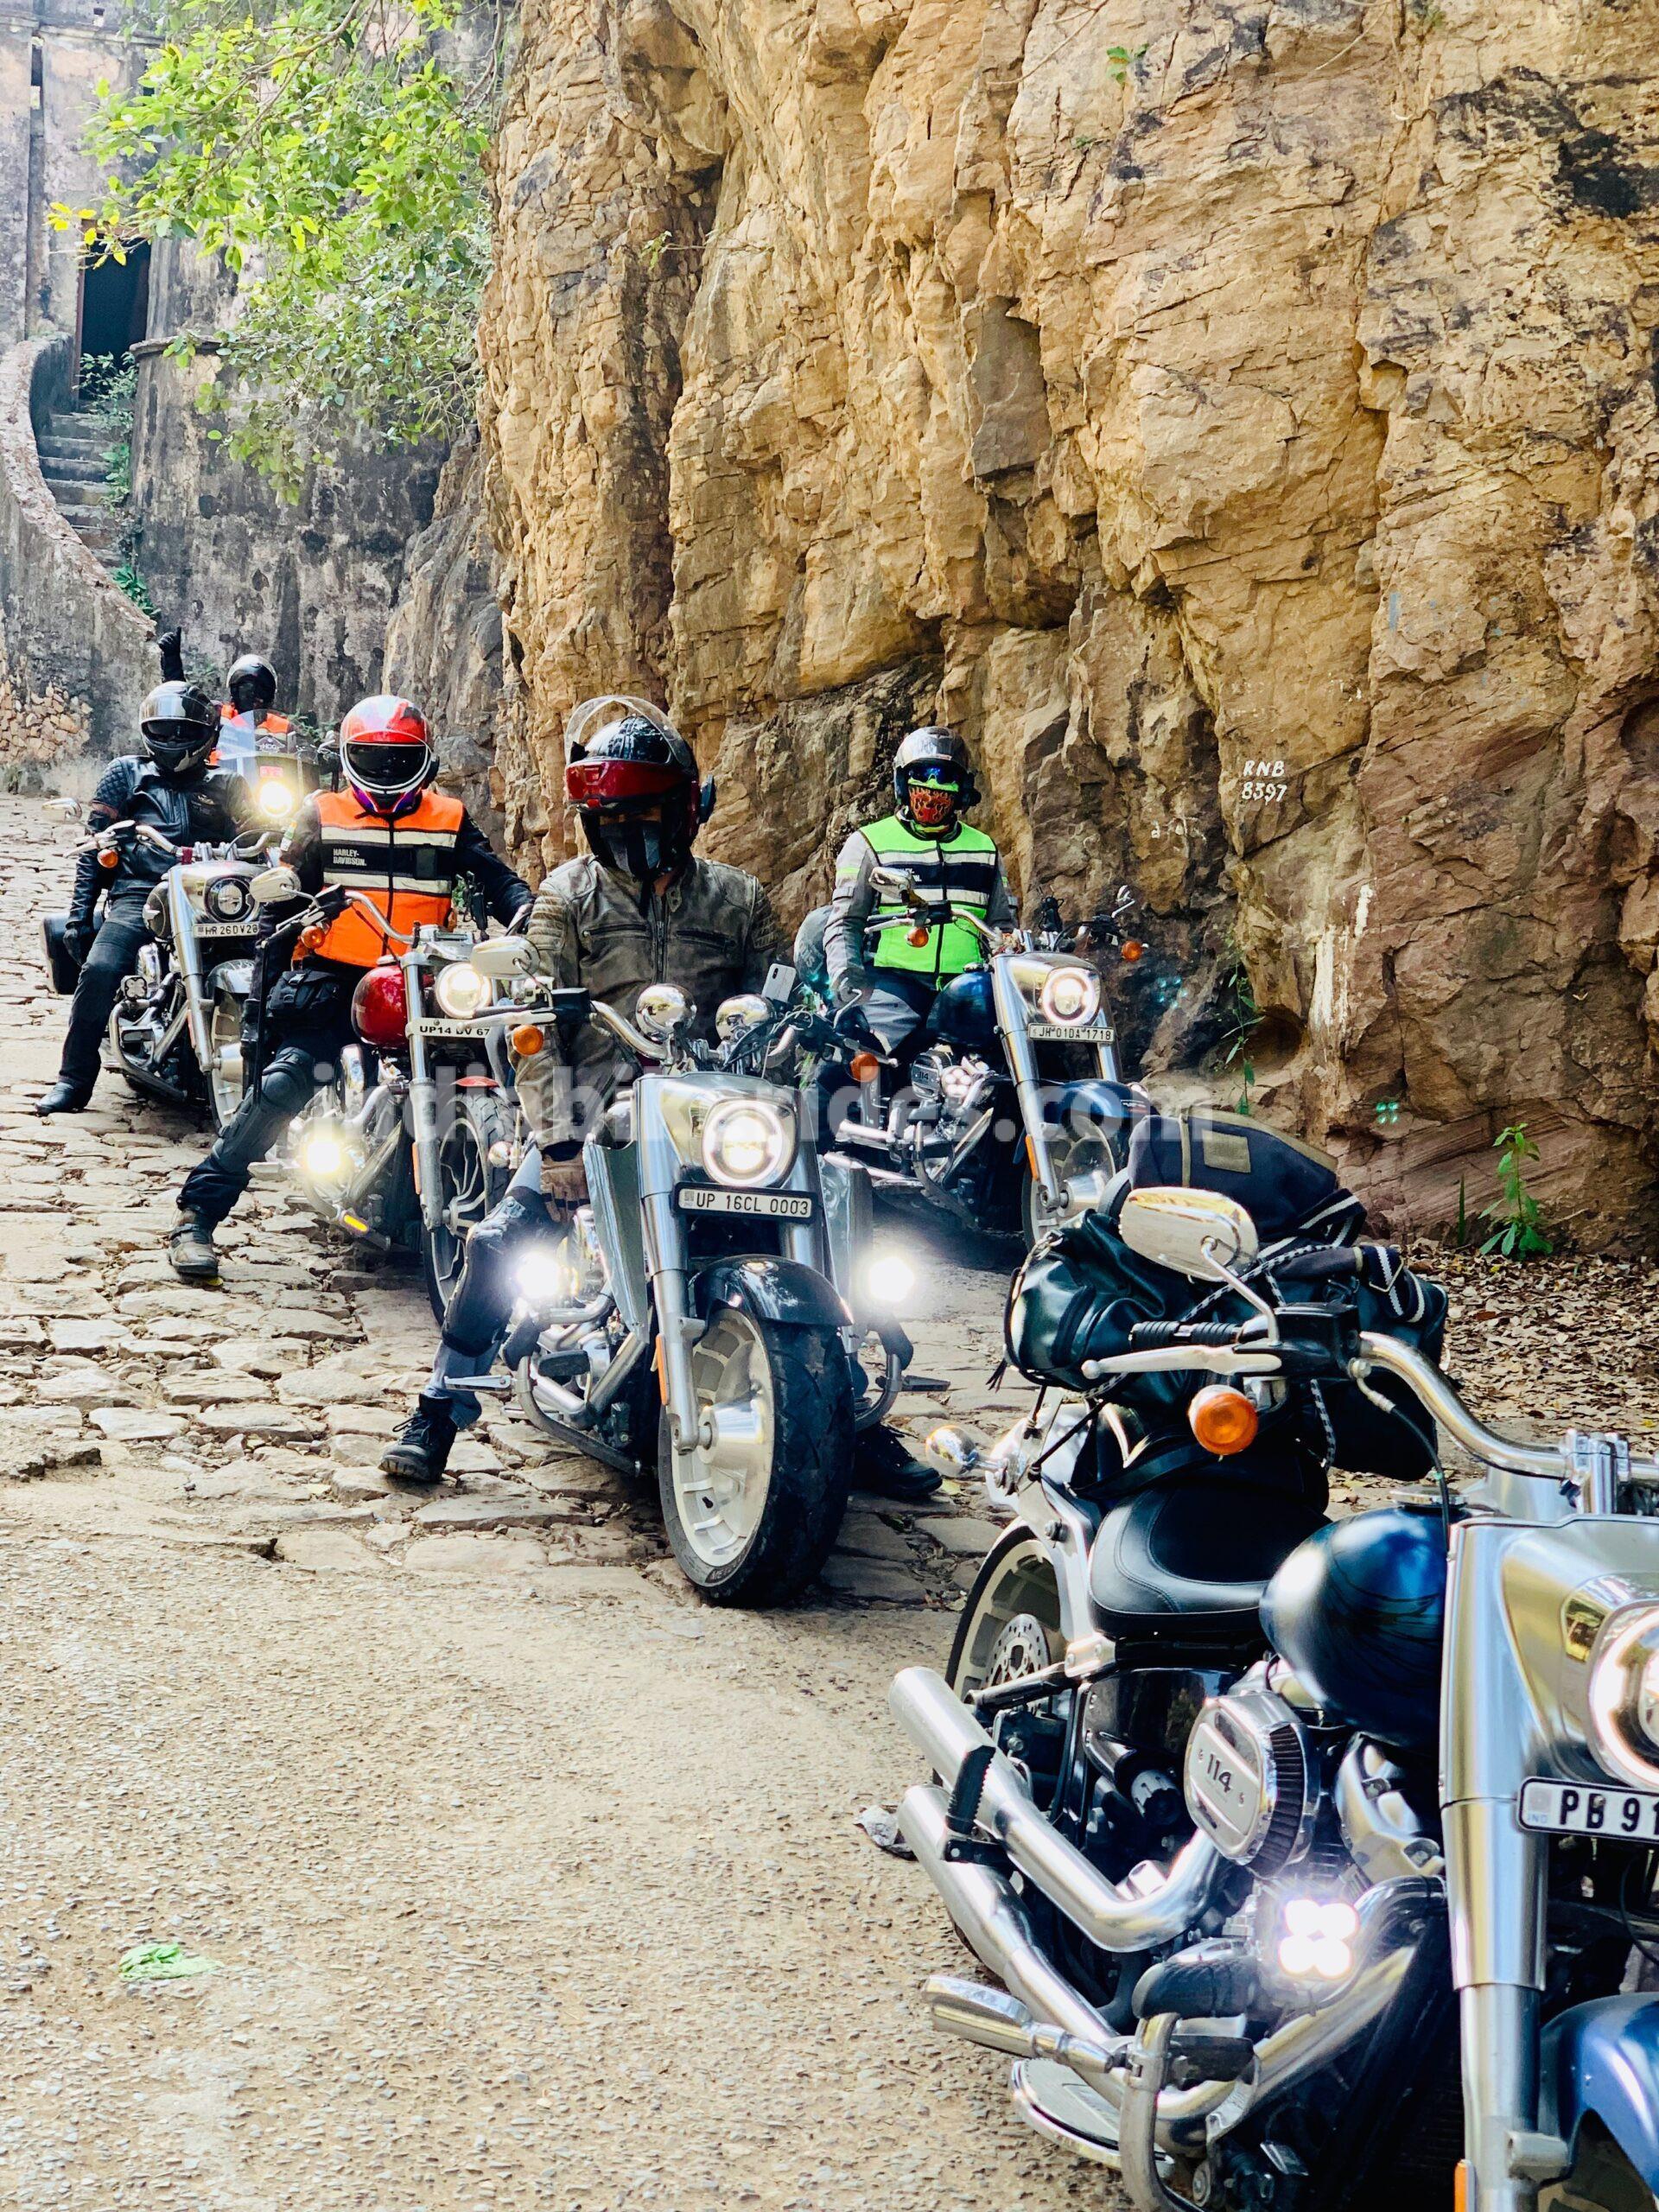 Harley Davidson, Ranthambore Fort, India Bike rides